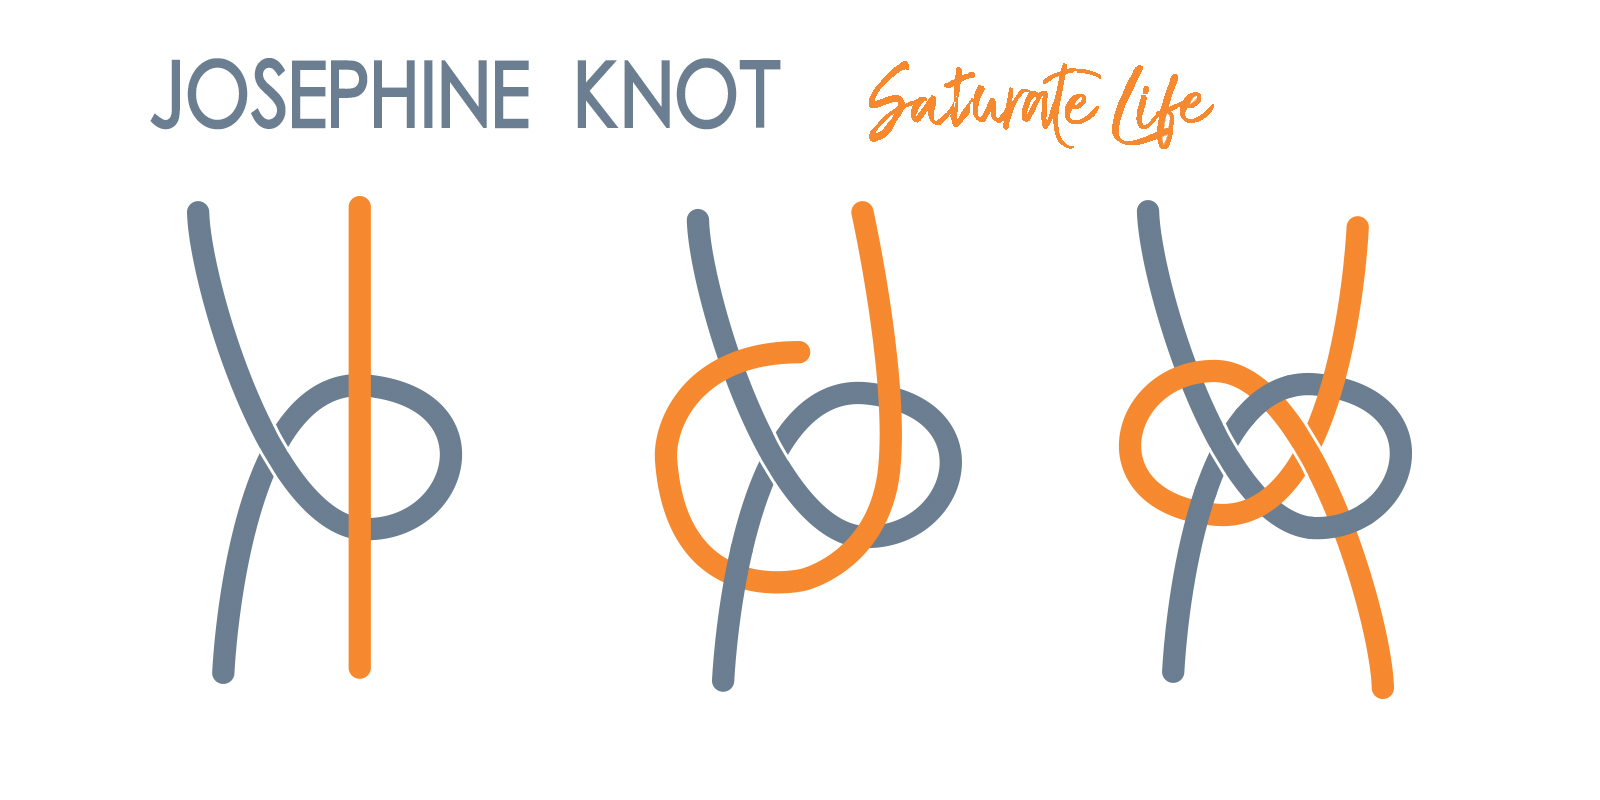 Josephine Knot - Saturate Life